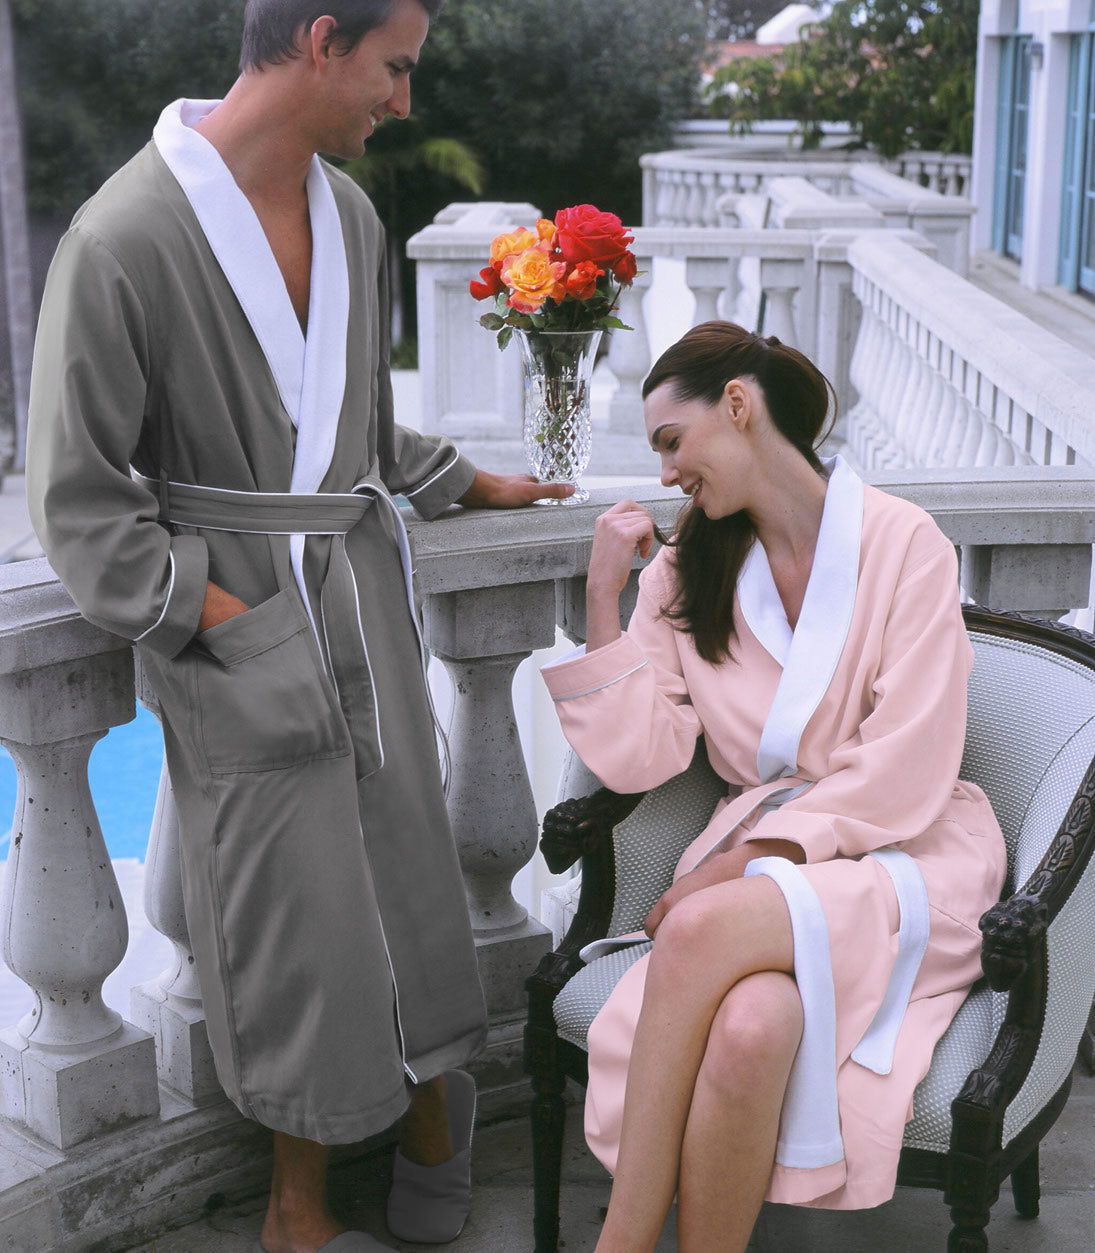 Luxury Bathrobes :: Plush Robes :: Super Soft Gray Plush Hooded